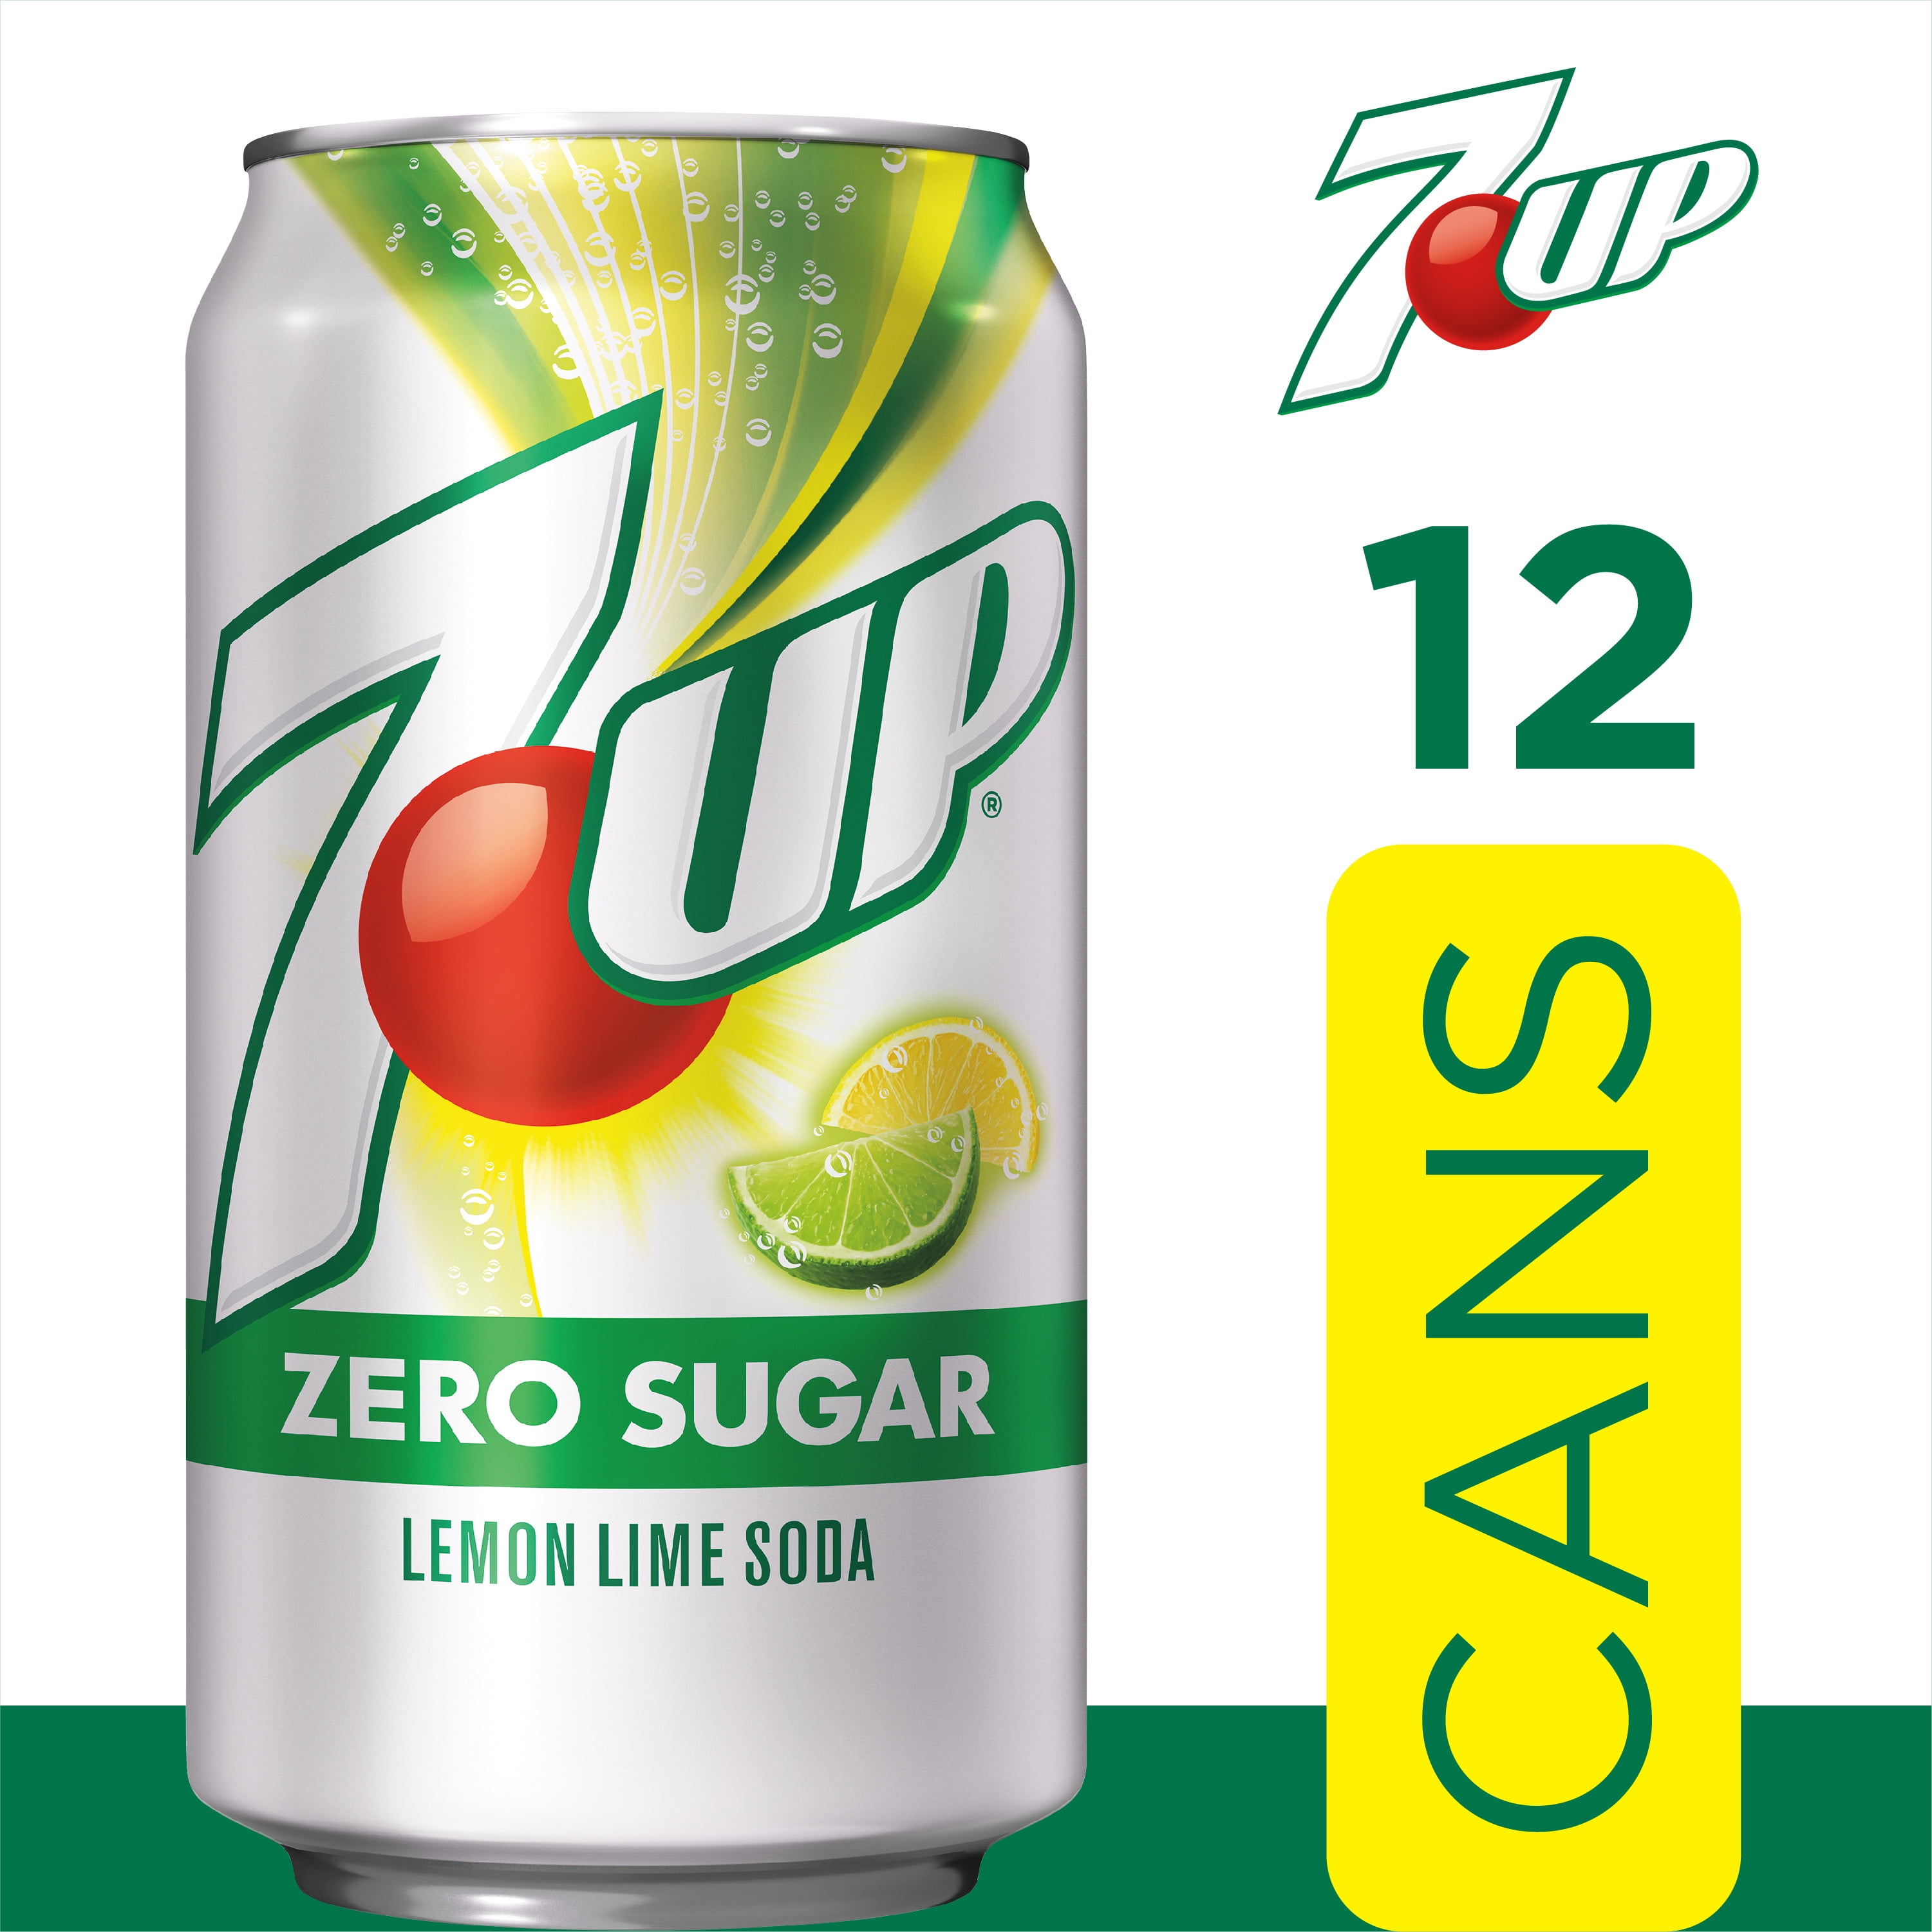 7UP Zero Sugar Lemon Lime Soda Pop, 12 fl oz, 12 Pack Cans